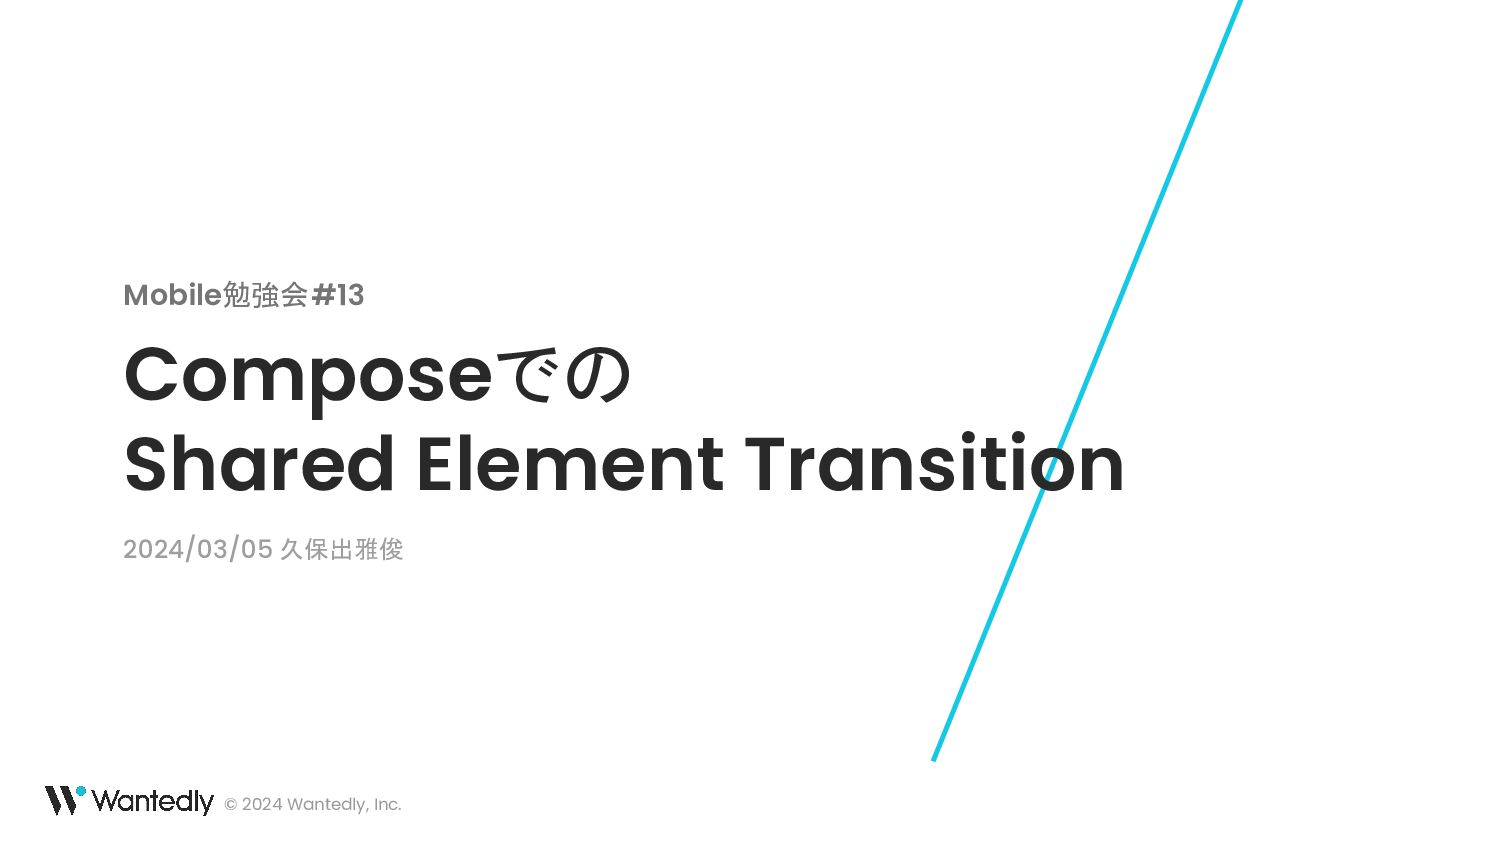 ComposeでのShared Element Transition / Shared Element Transition in Compose